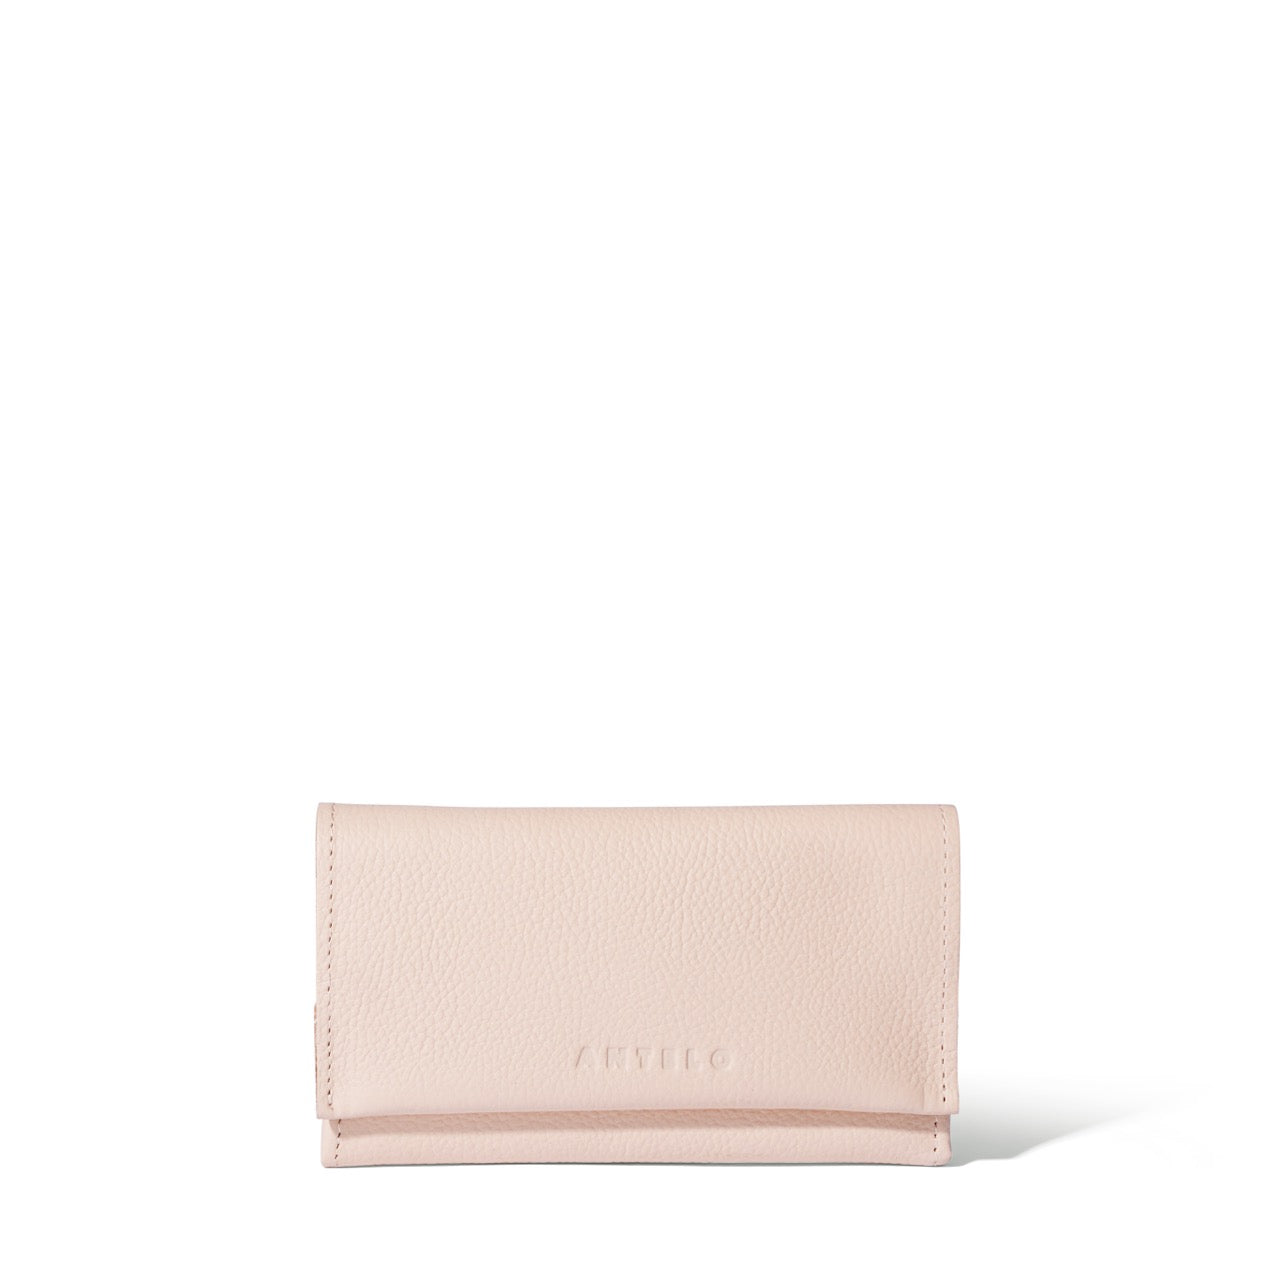 Antelo Wallet Evie Three-Quarter Leather Trifold Wallet